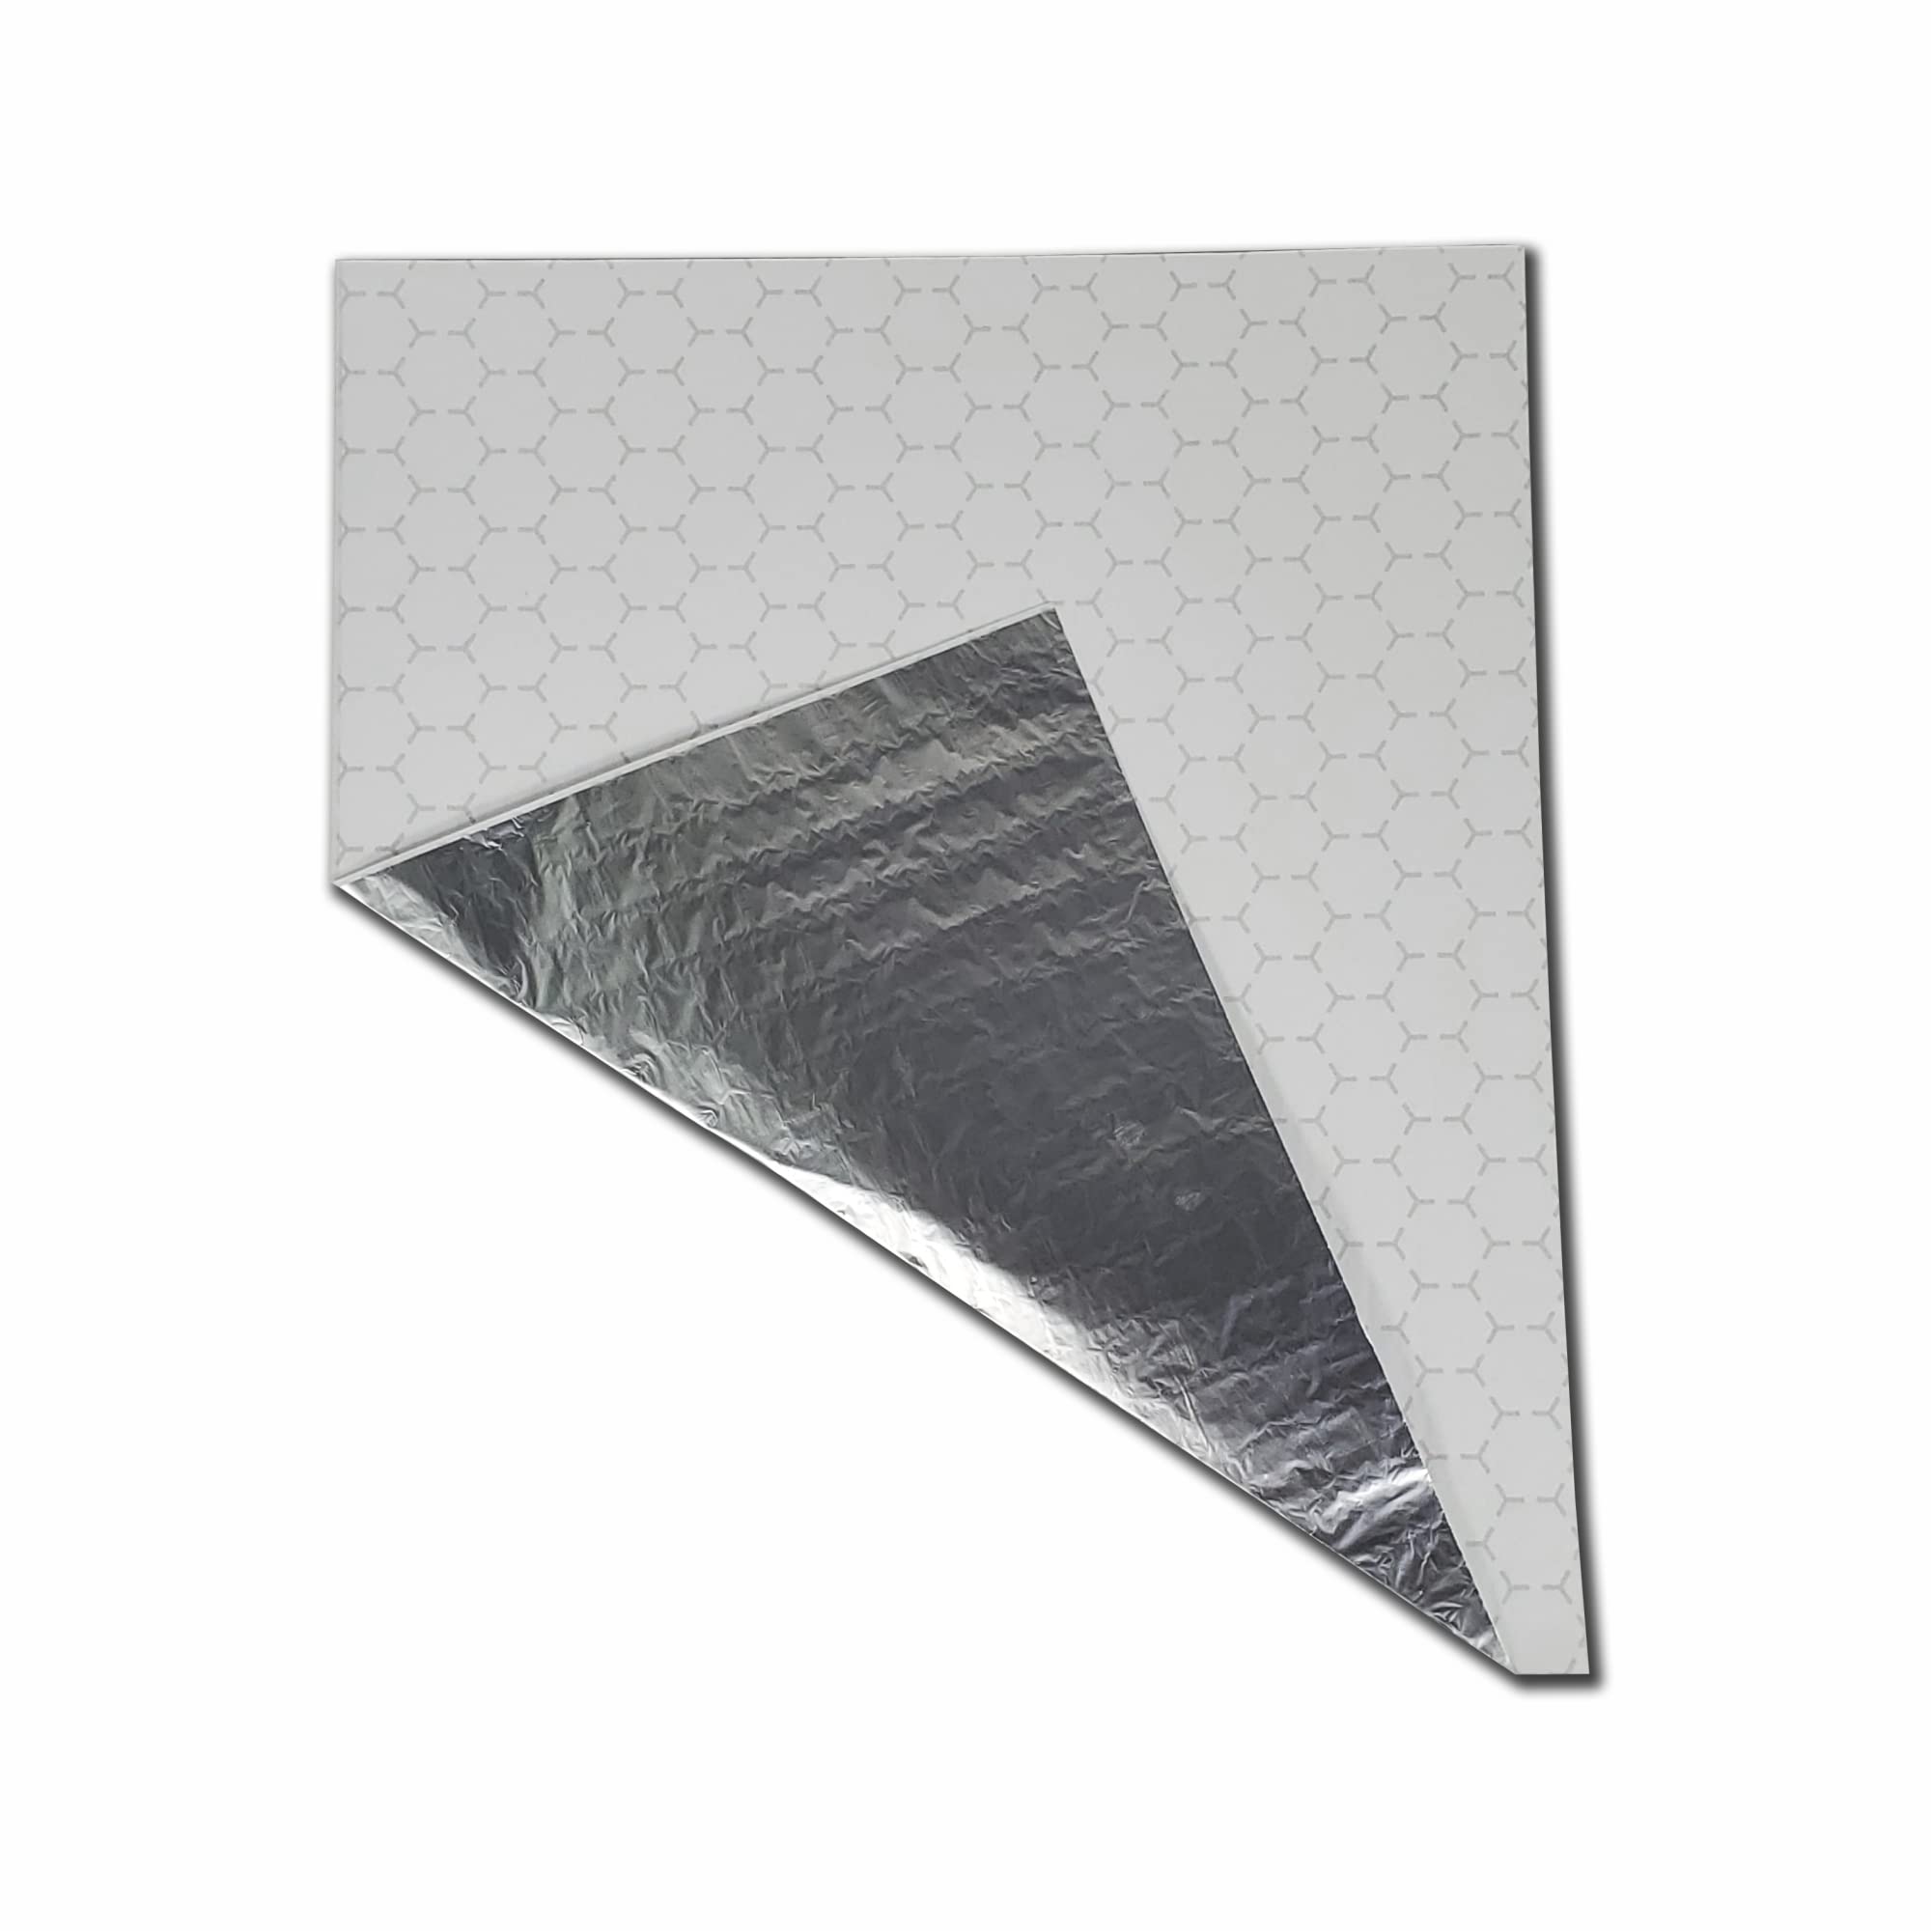 Rhino Foil - Insulated Foil Wrap - 12x12